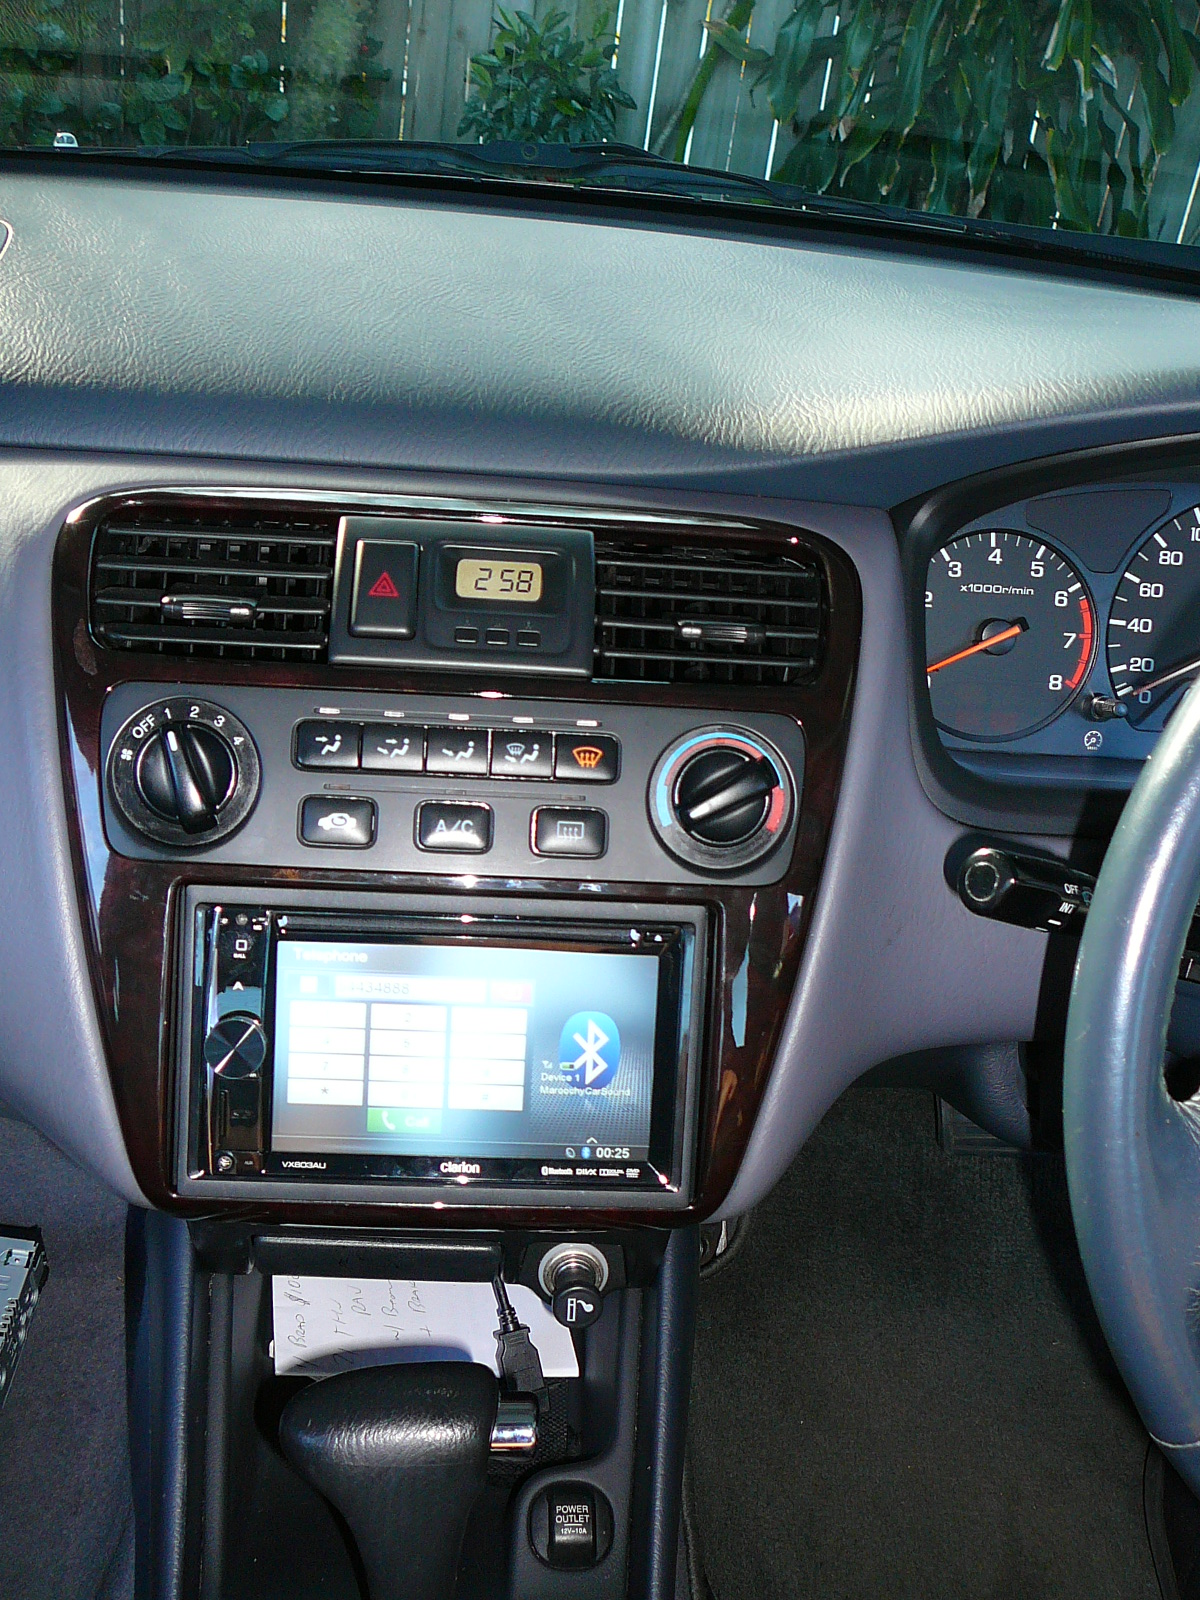 Honda Accord 2001, Clarion VX603 In dash GPS Navigation